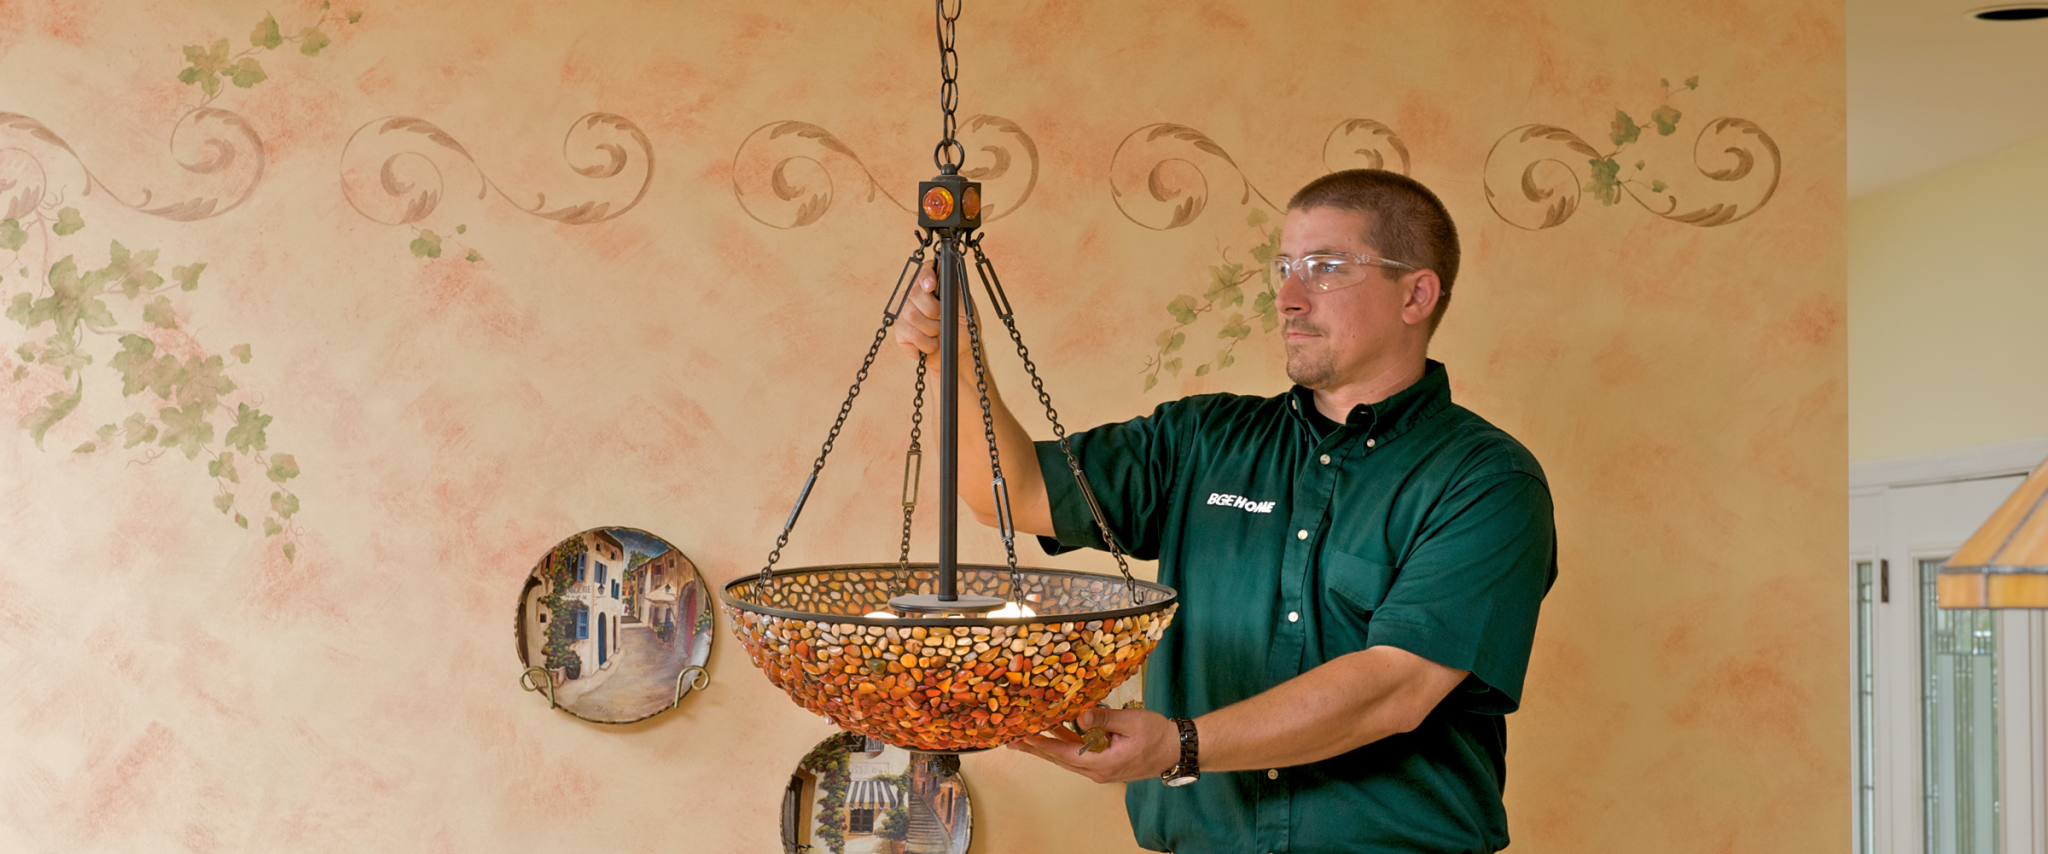 An electrician hangs a light fixture in a home